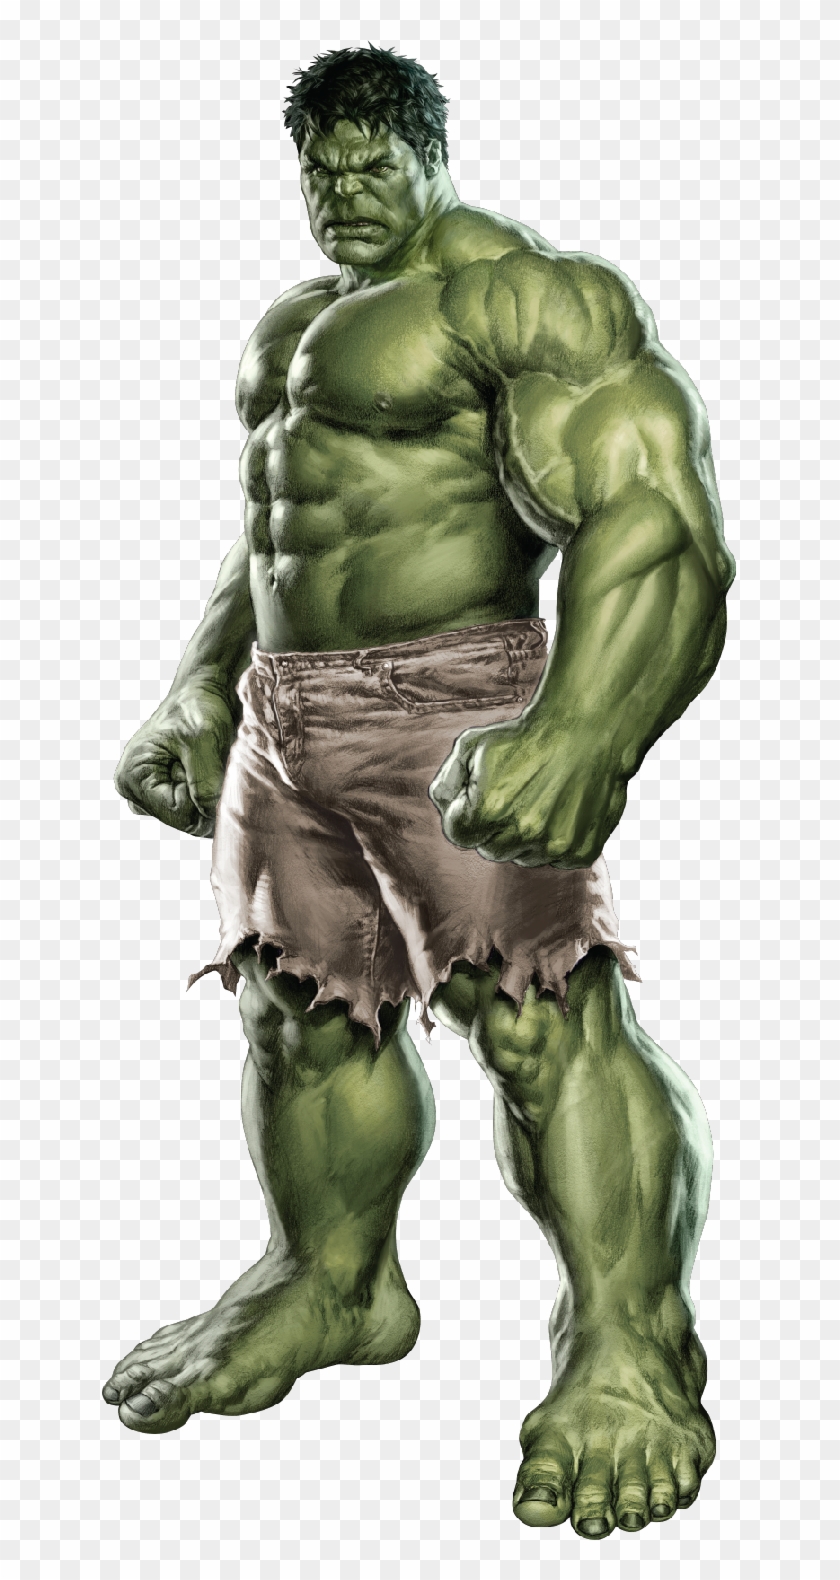 Hulk Png Download Image - Hulk Superhero Clipart #562218